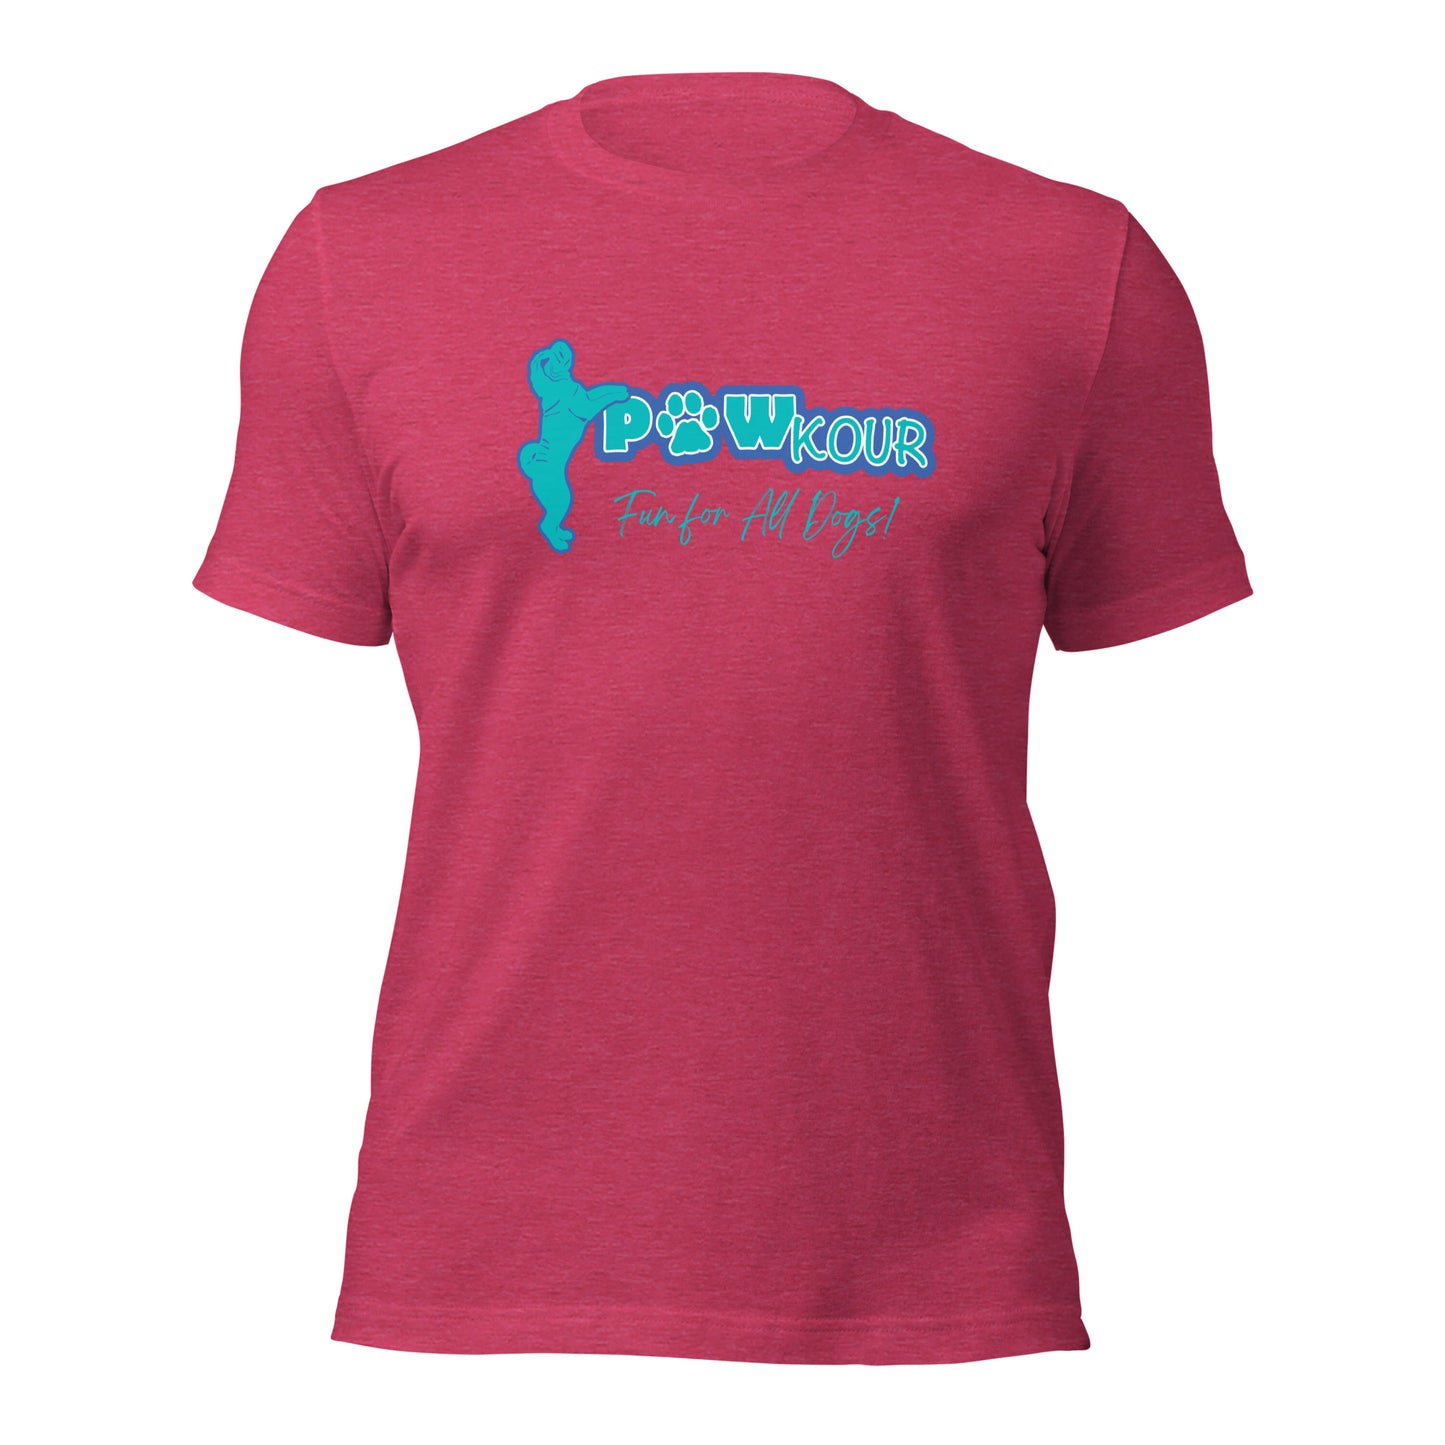 PAWKOUR - Shar-pei Unisex t-shirt